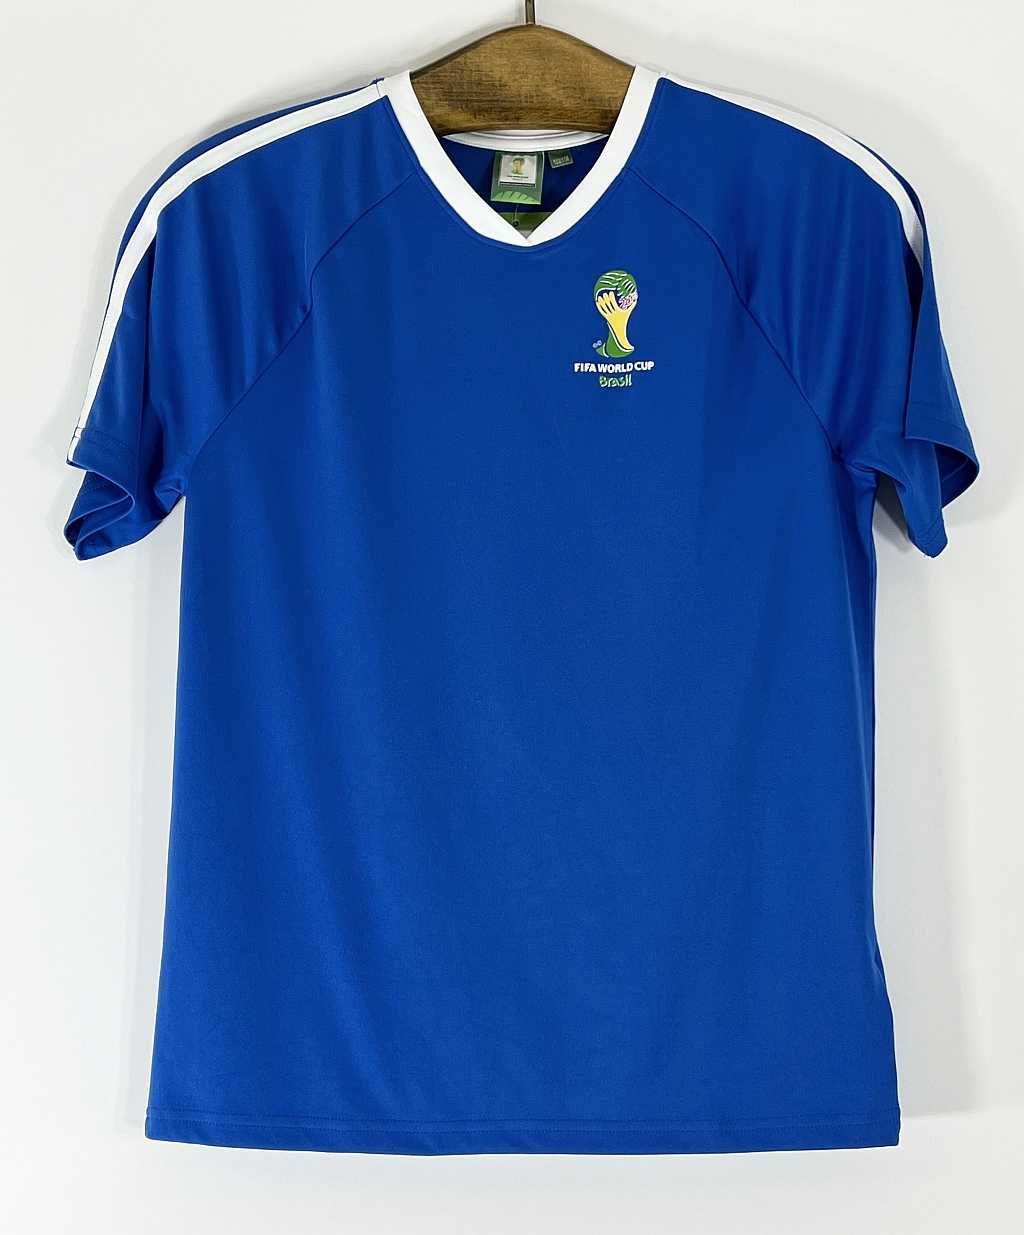 T-shirt koszulka chłopięca niebieska Fifa World Cup R 152 / 158